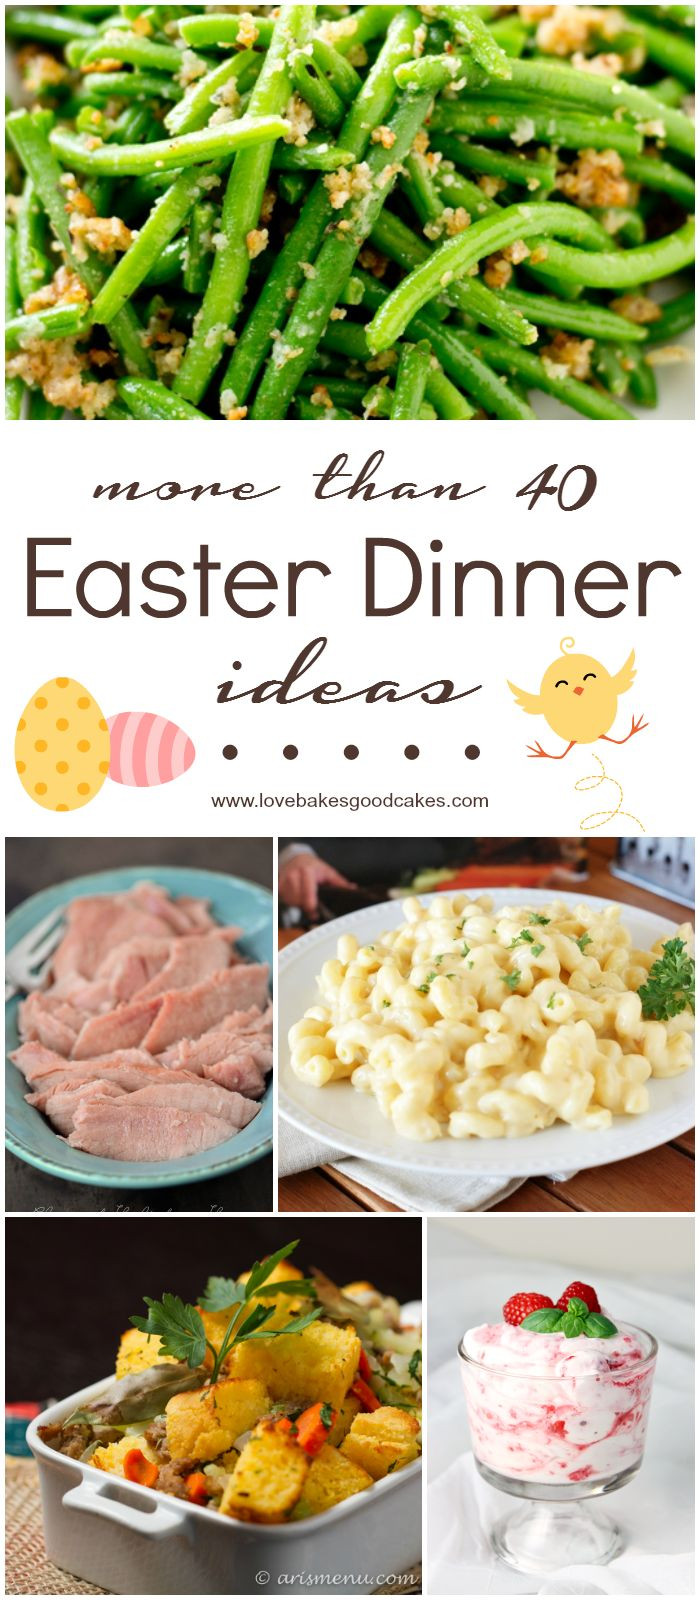 Healthy Easter Dinner Recipes
 Best 25 Easter dinner menu ideas ideas on Pinterest